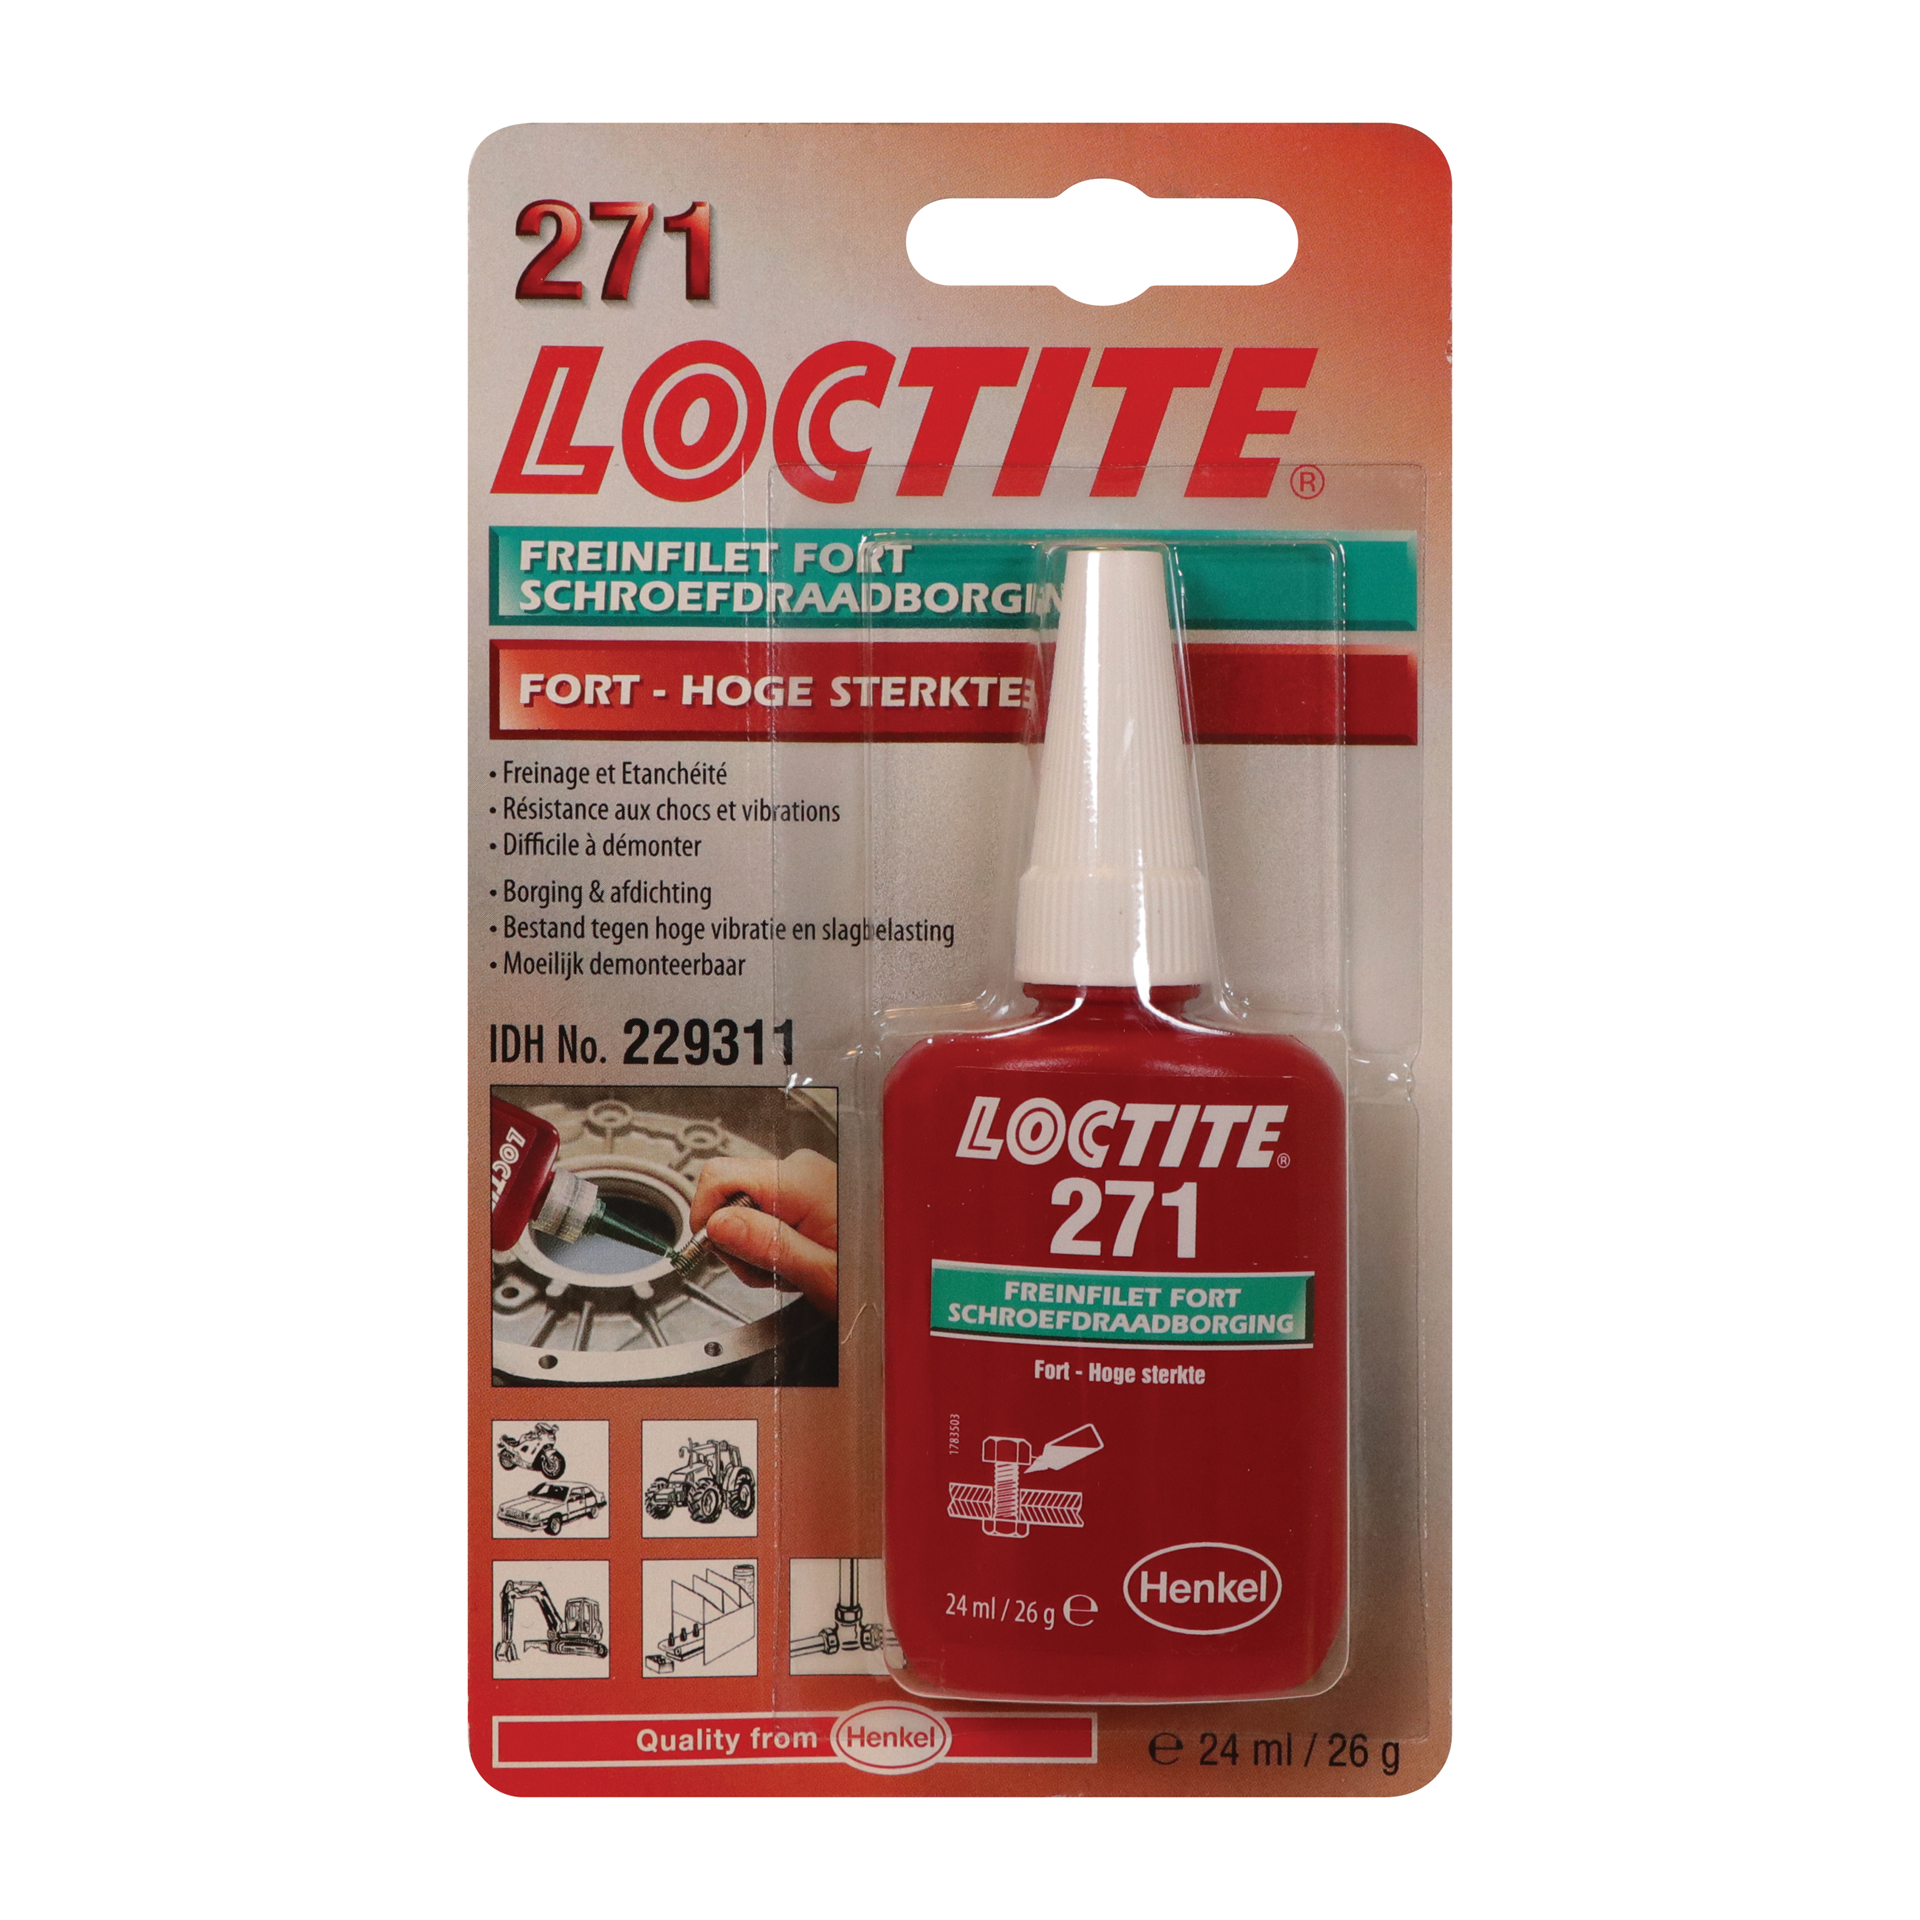 Loctite Loctite 271 Borgmiddel hoog rood 24ml 1831704